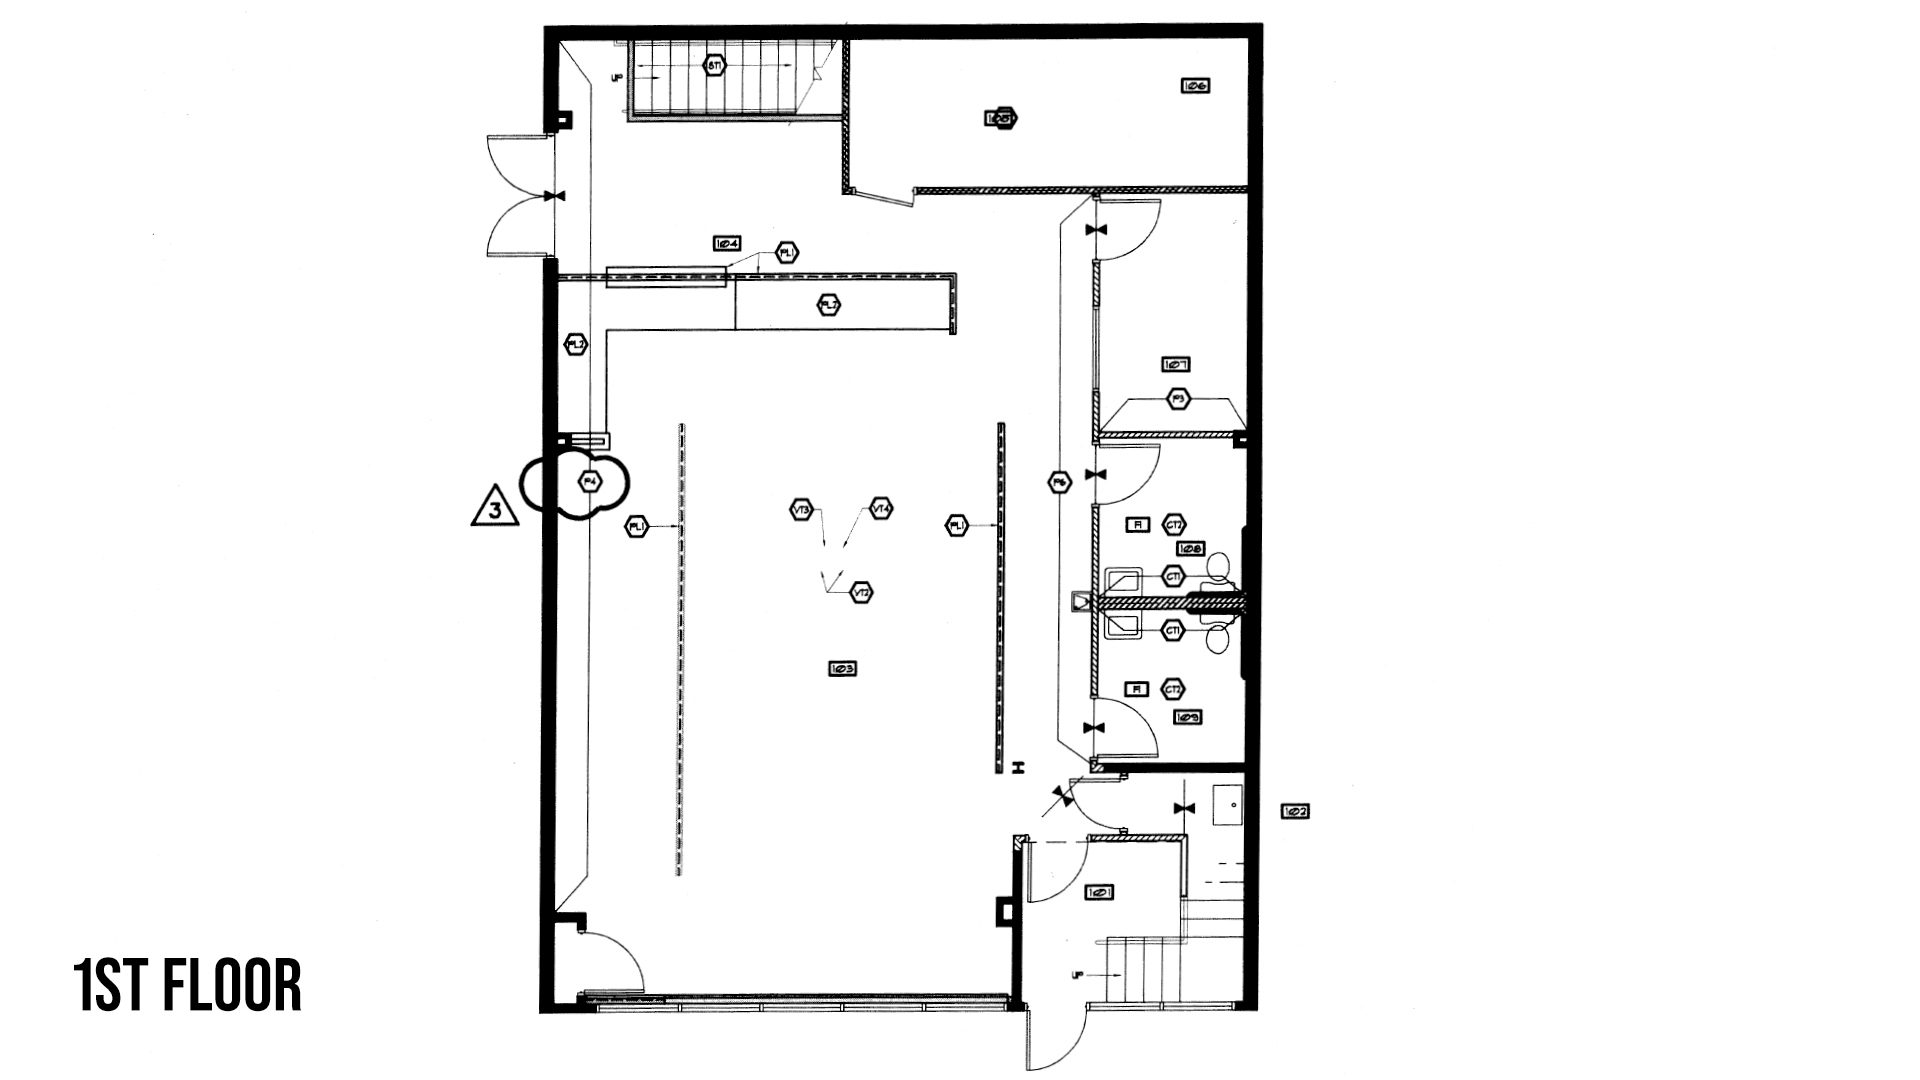 8474 Tyco Rd - 1st floor plan